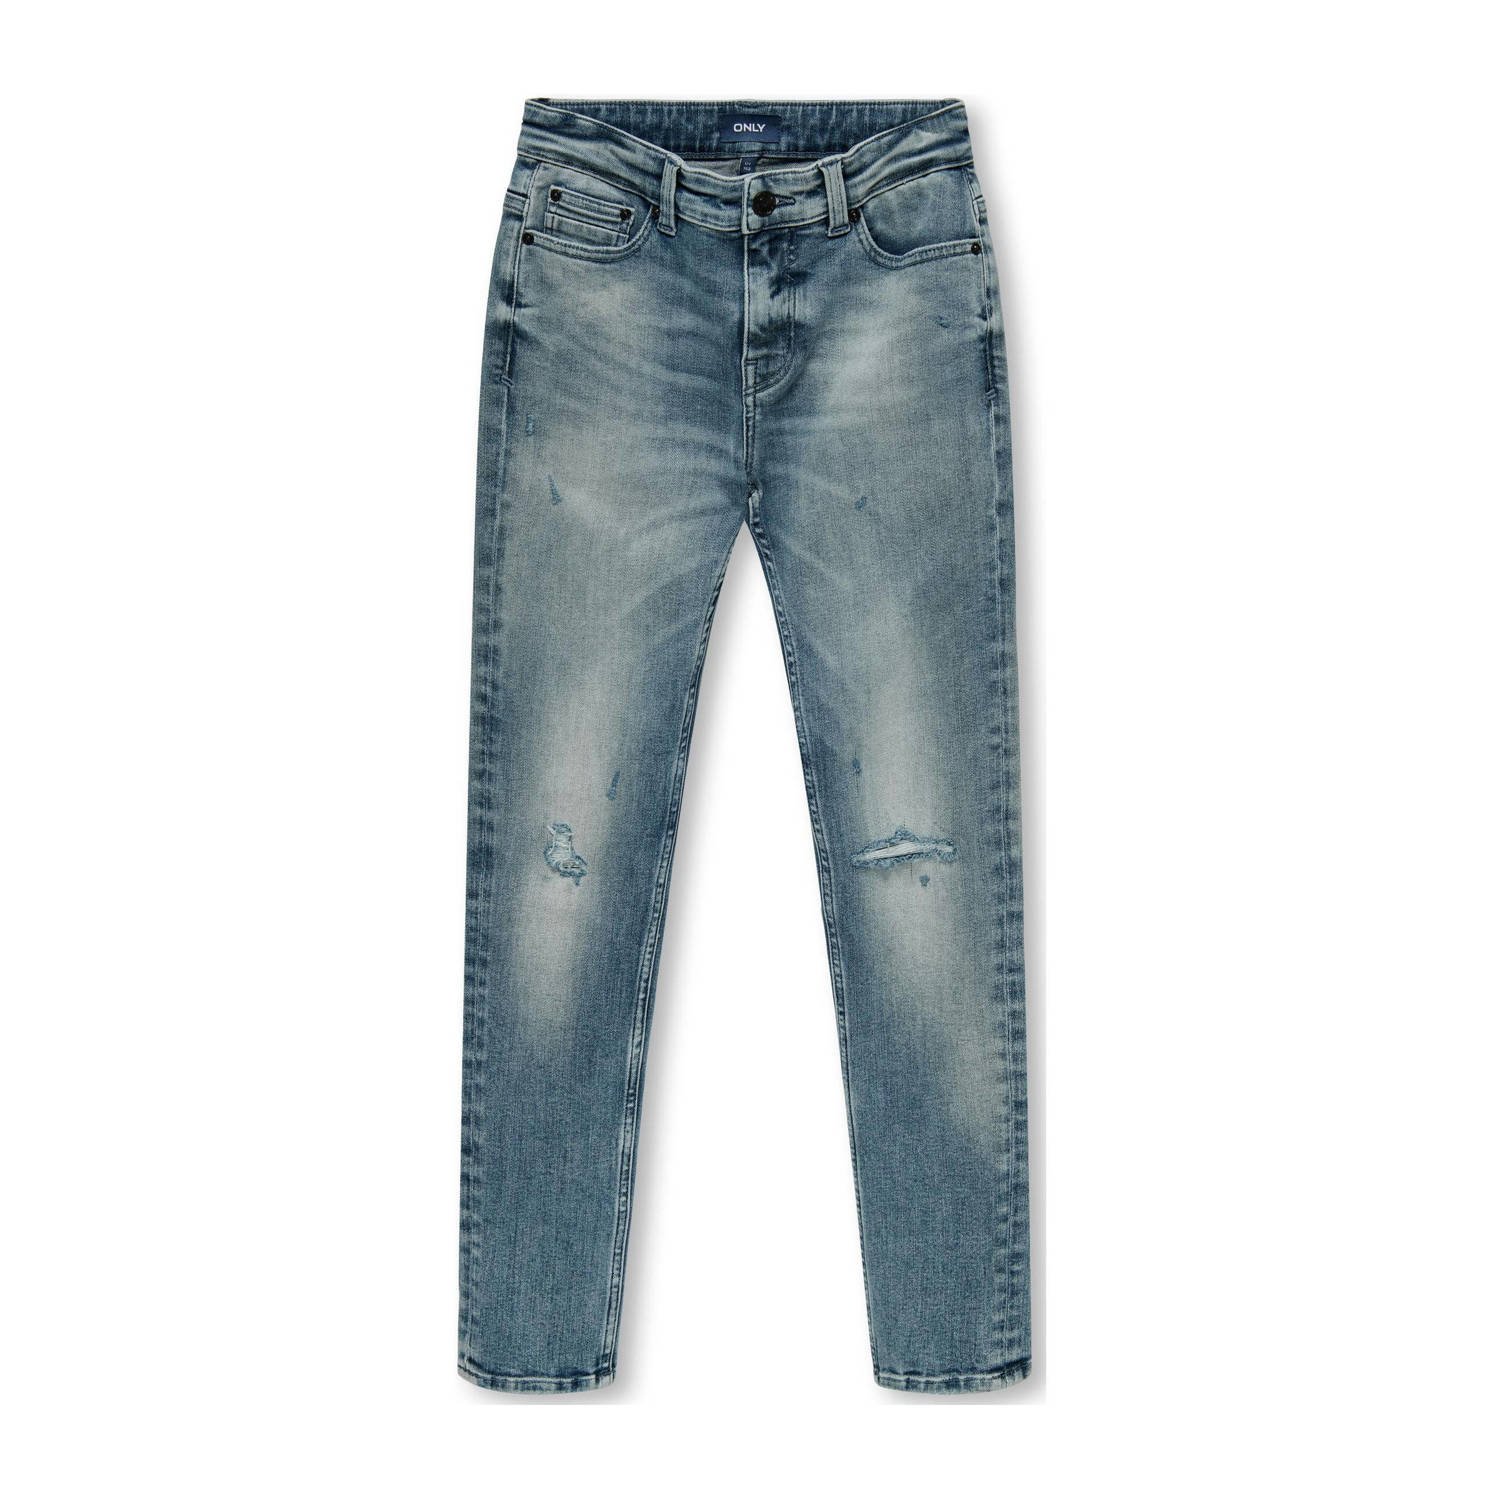 Only KIDS BOY slim fit jeans KOBROPE JAX bright blue denim Blauw Jongens Stretchdenim 116